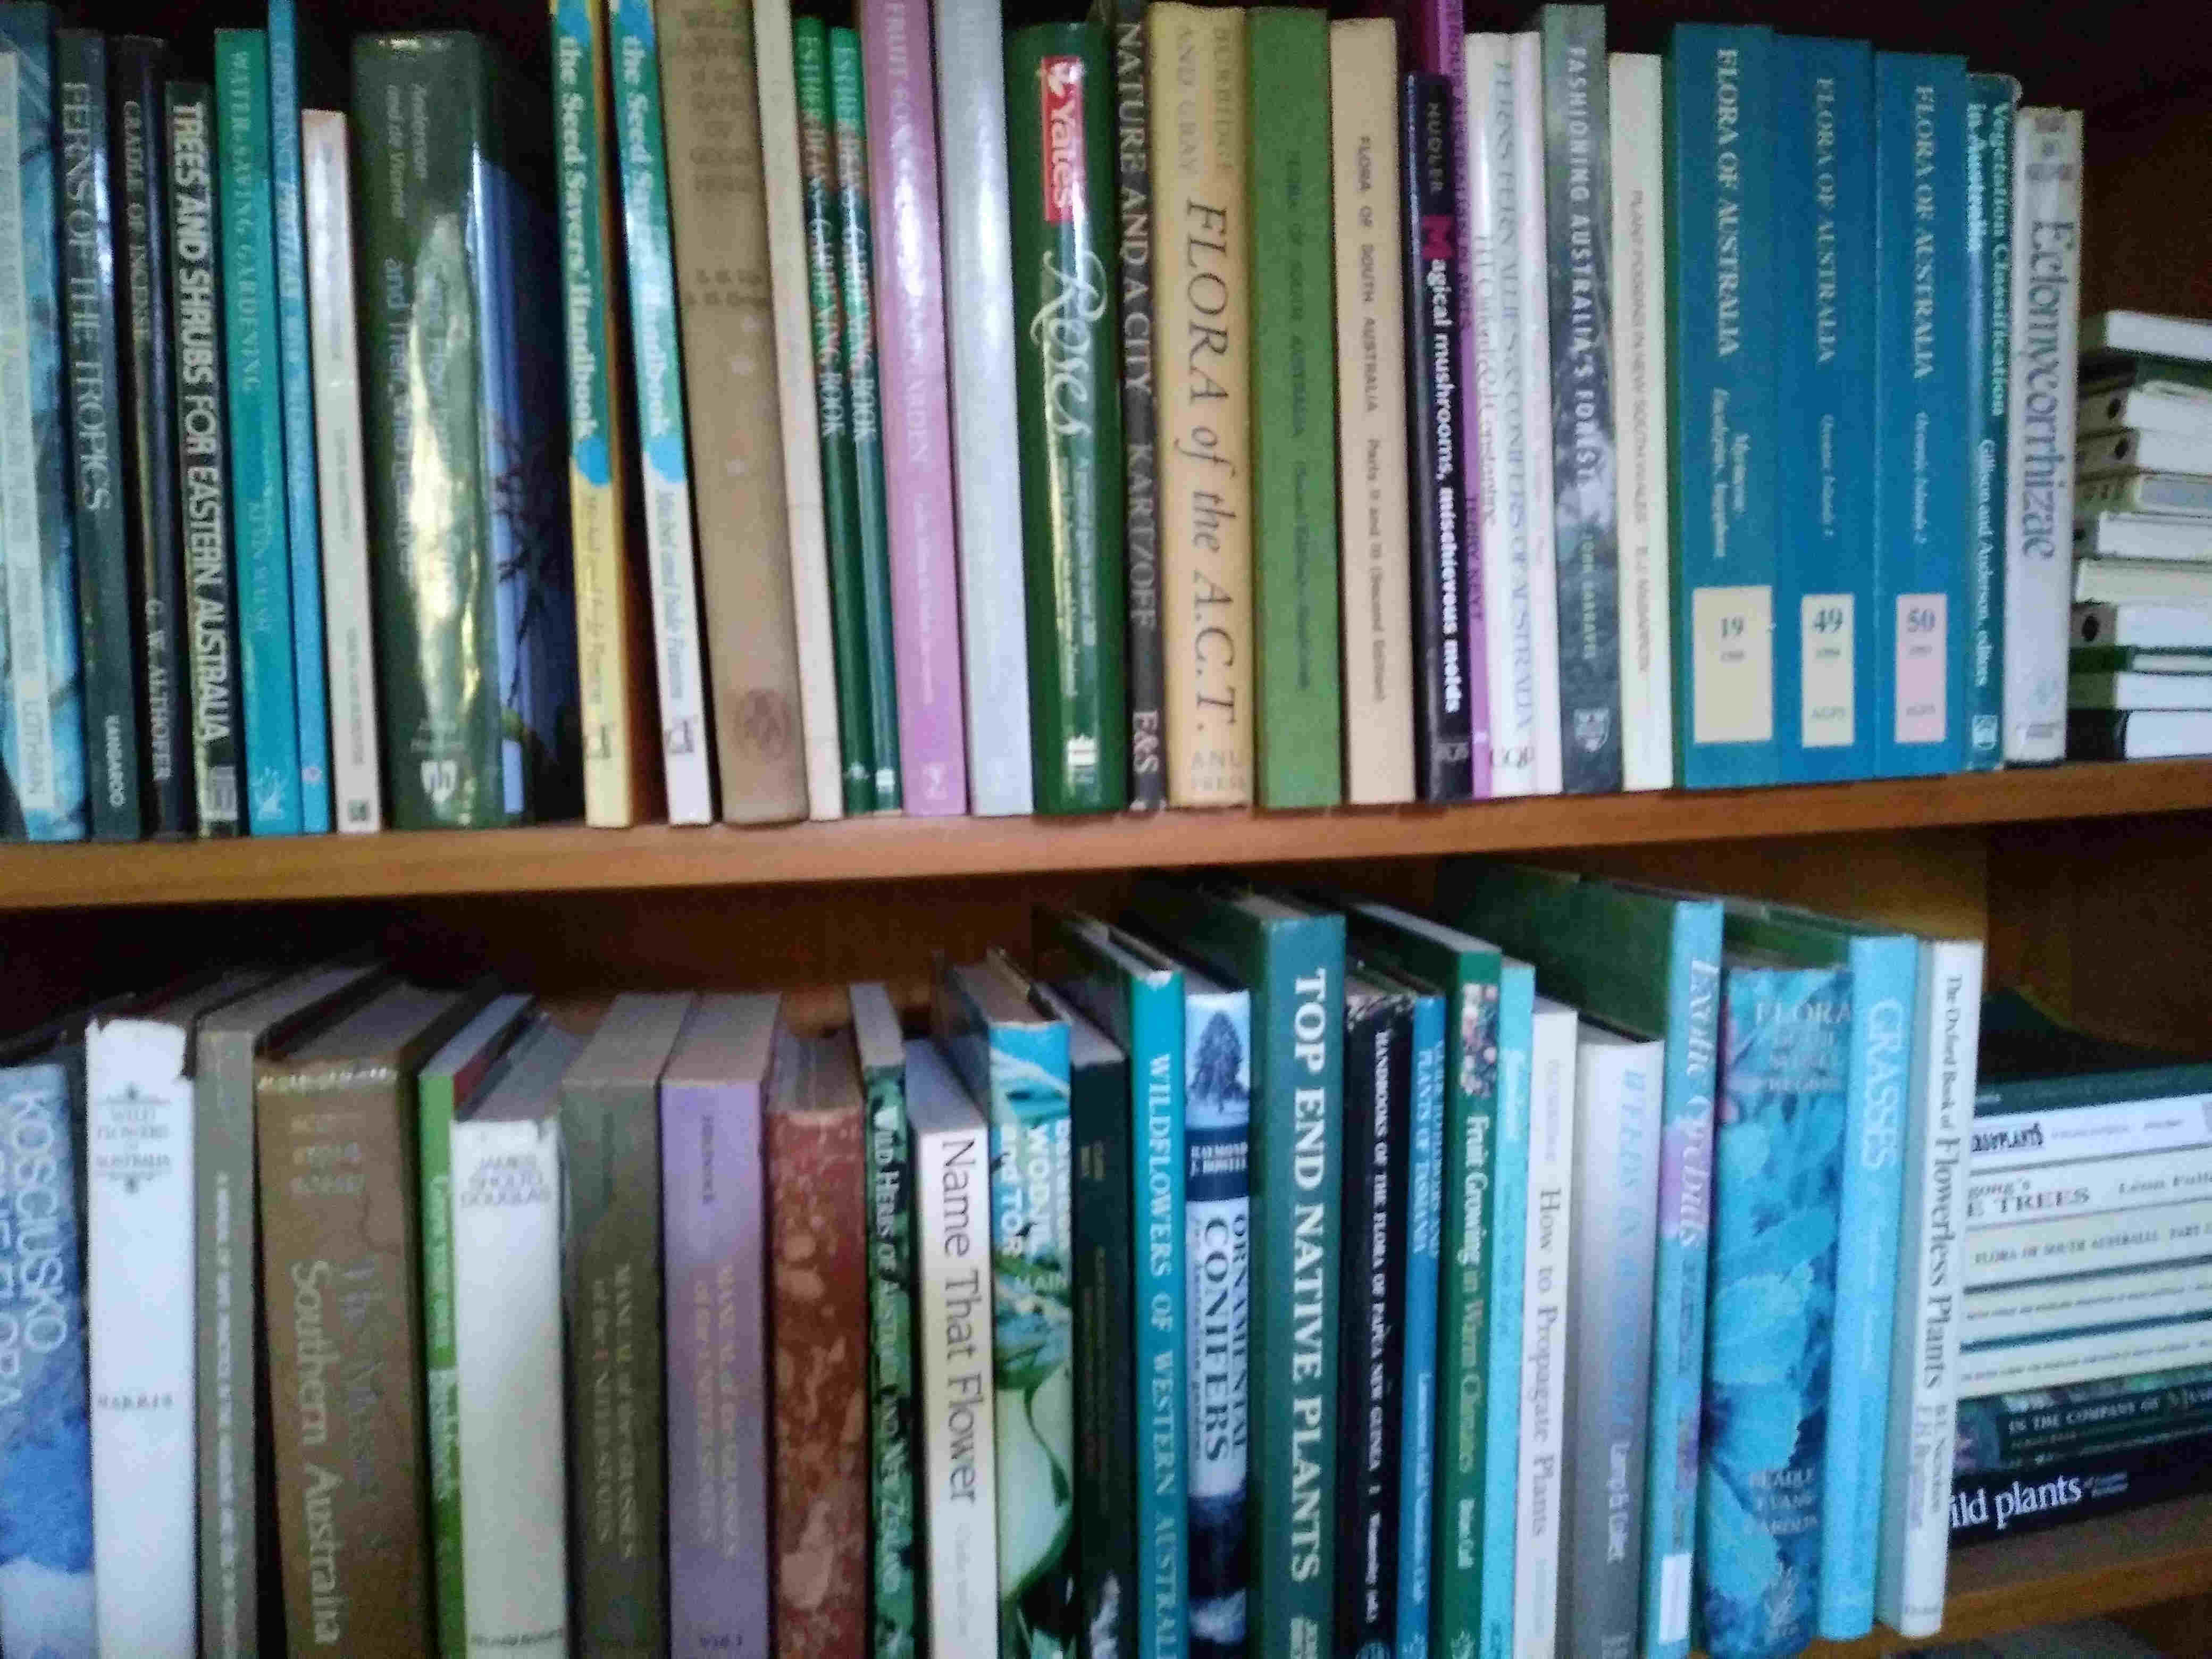 Kay's book shelves